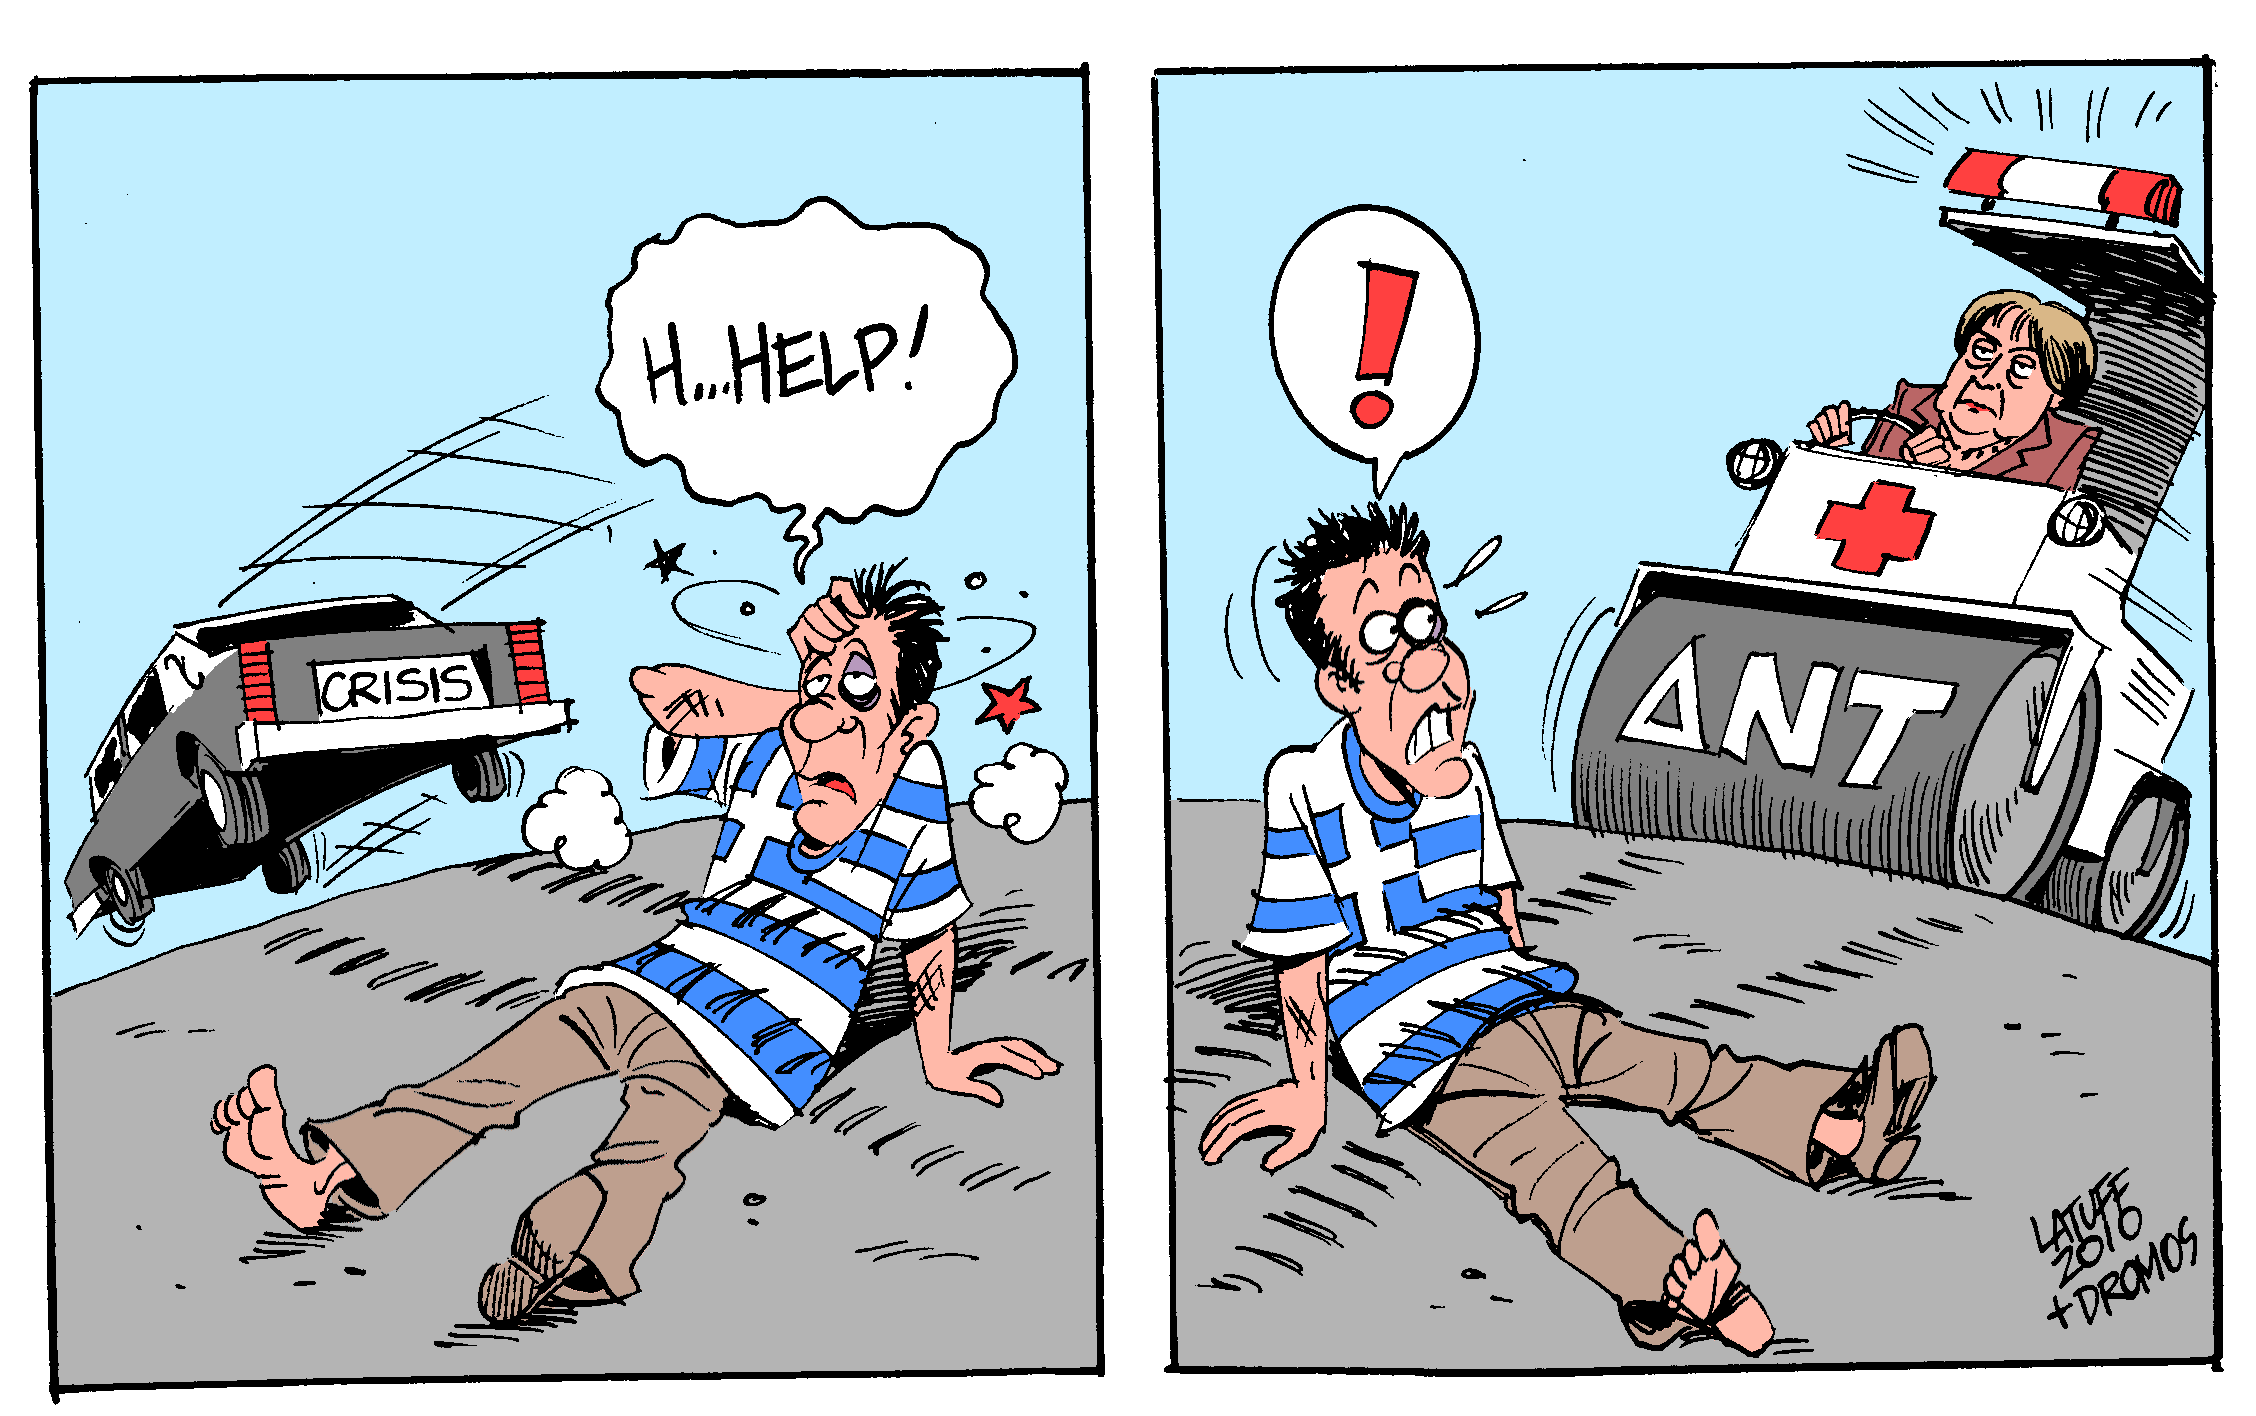 Greece: Help!